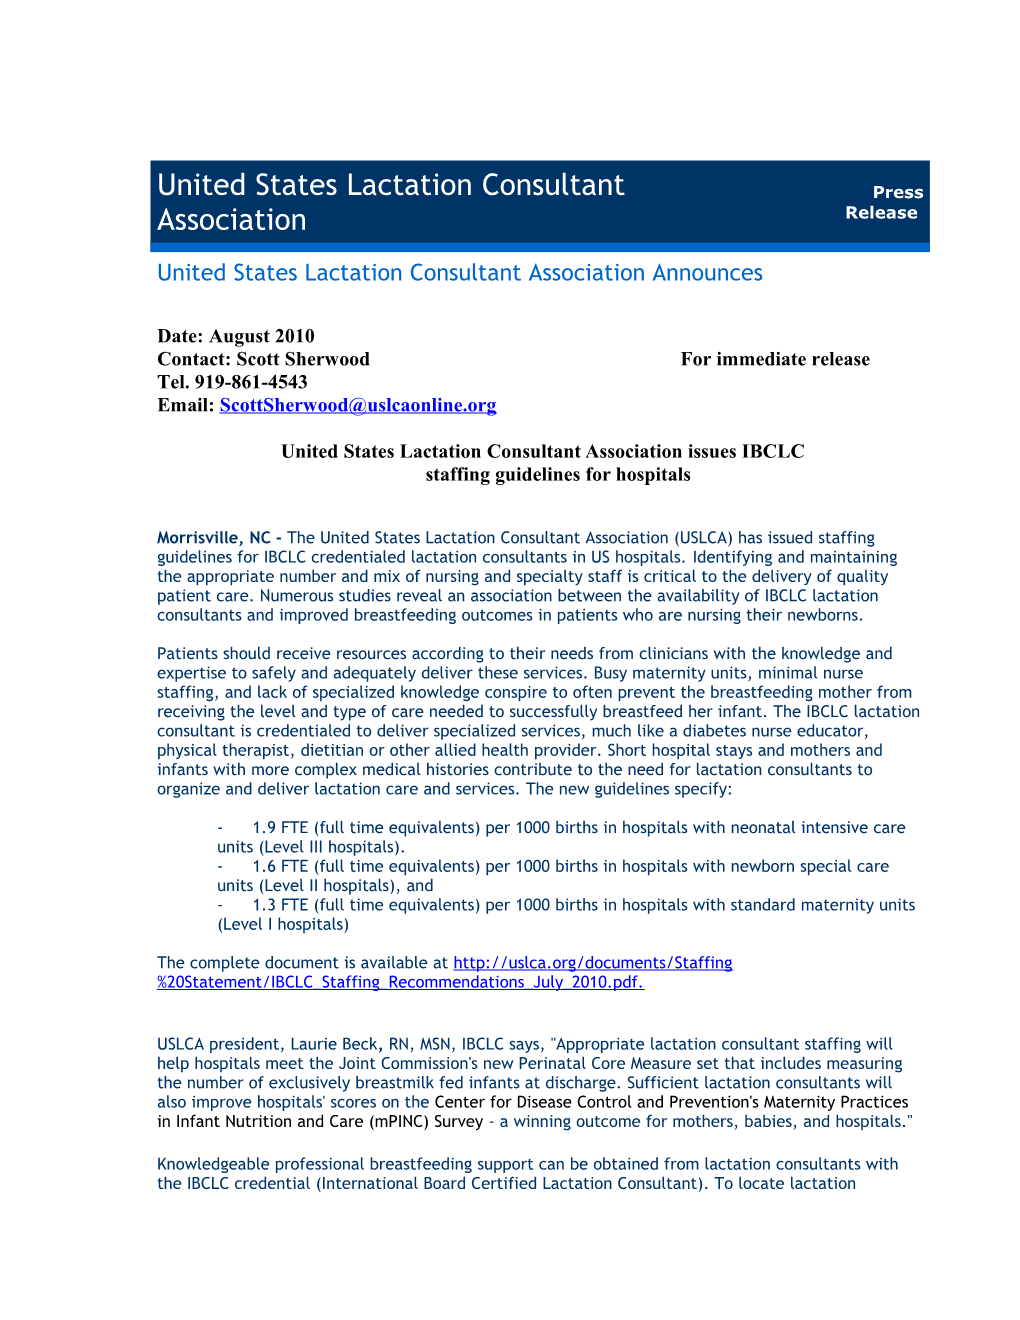 United States Lactation Consultant Association